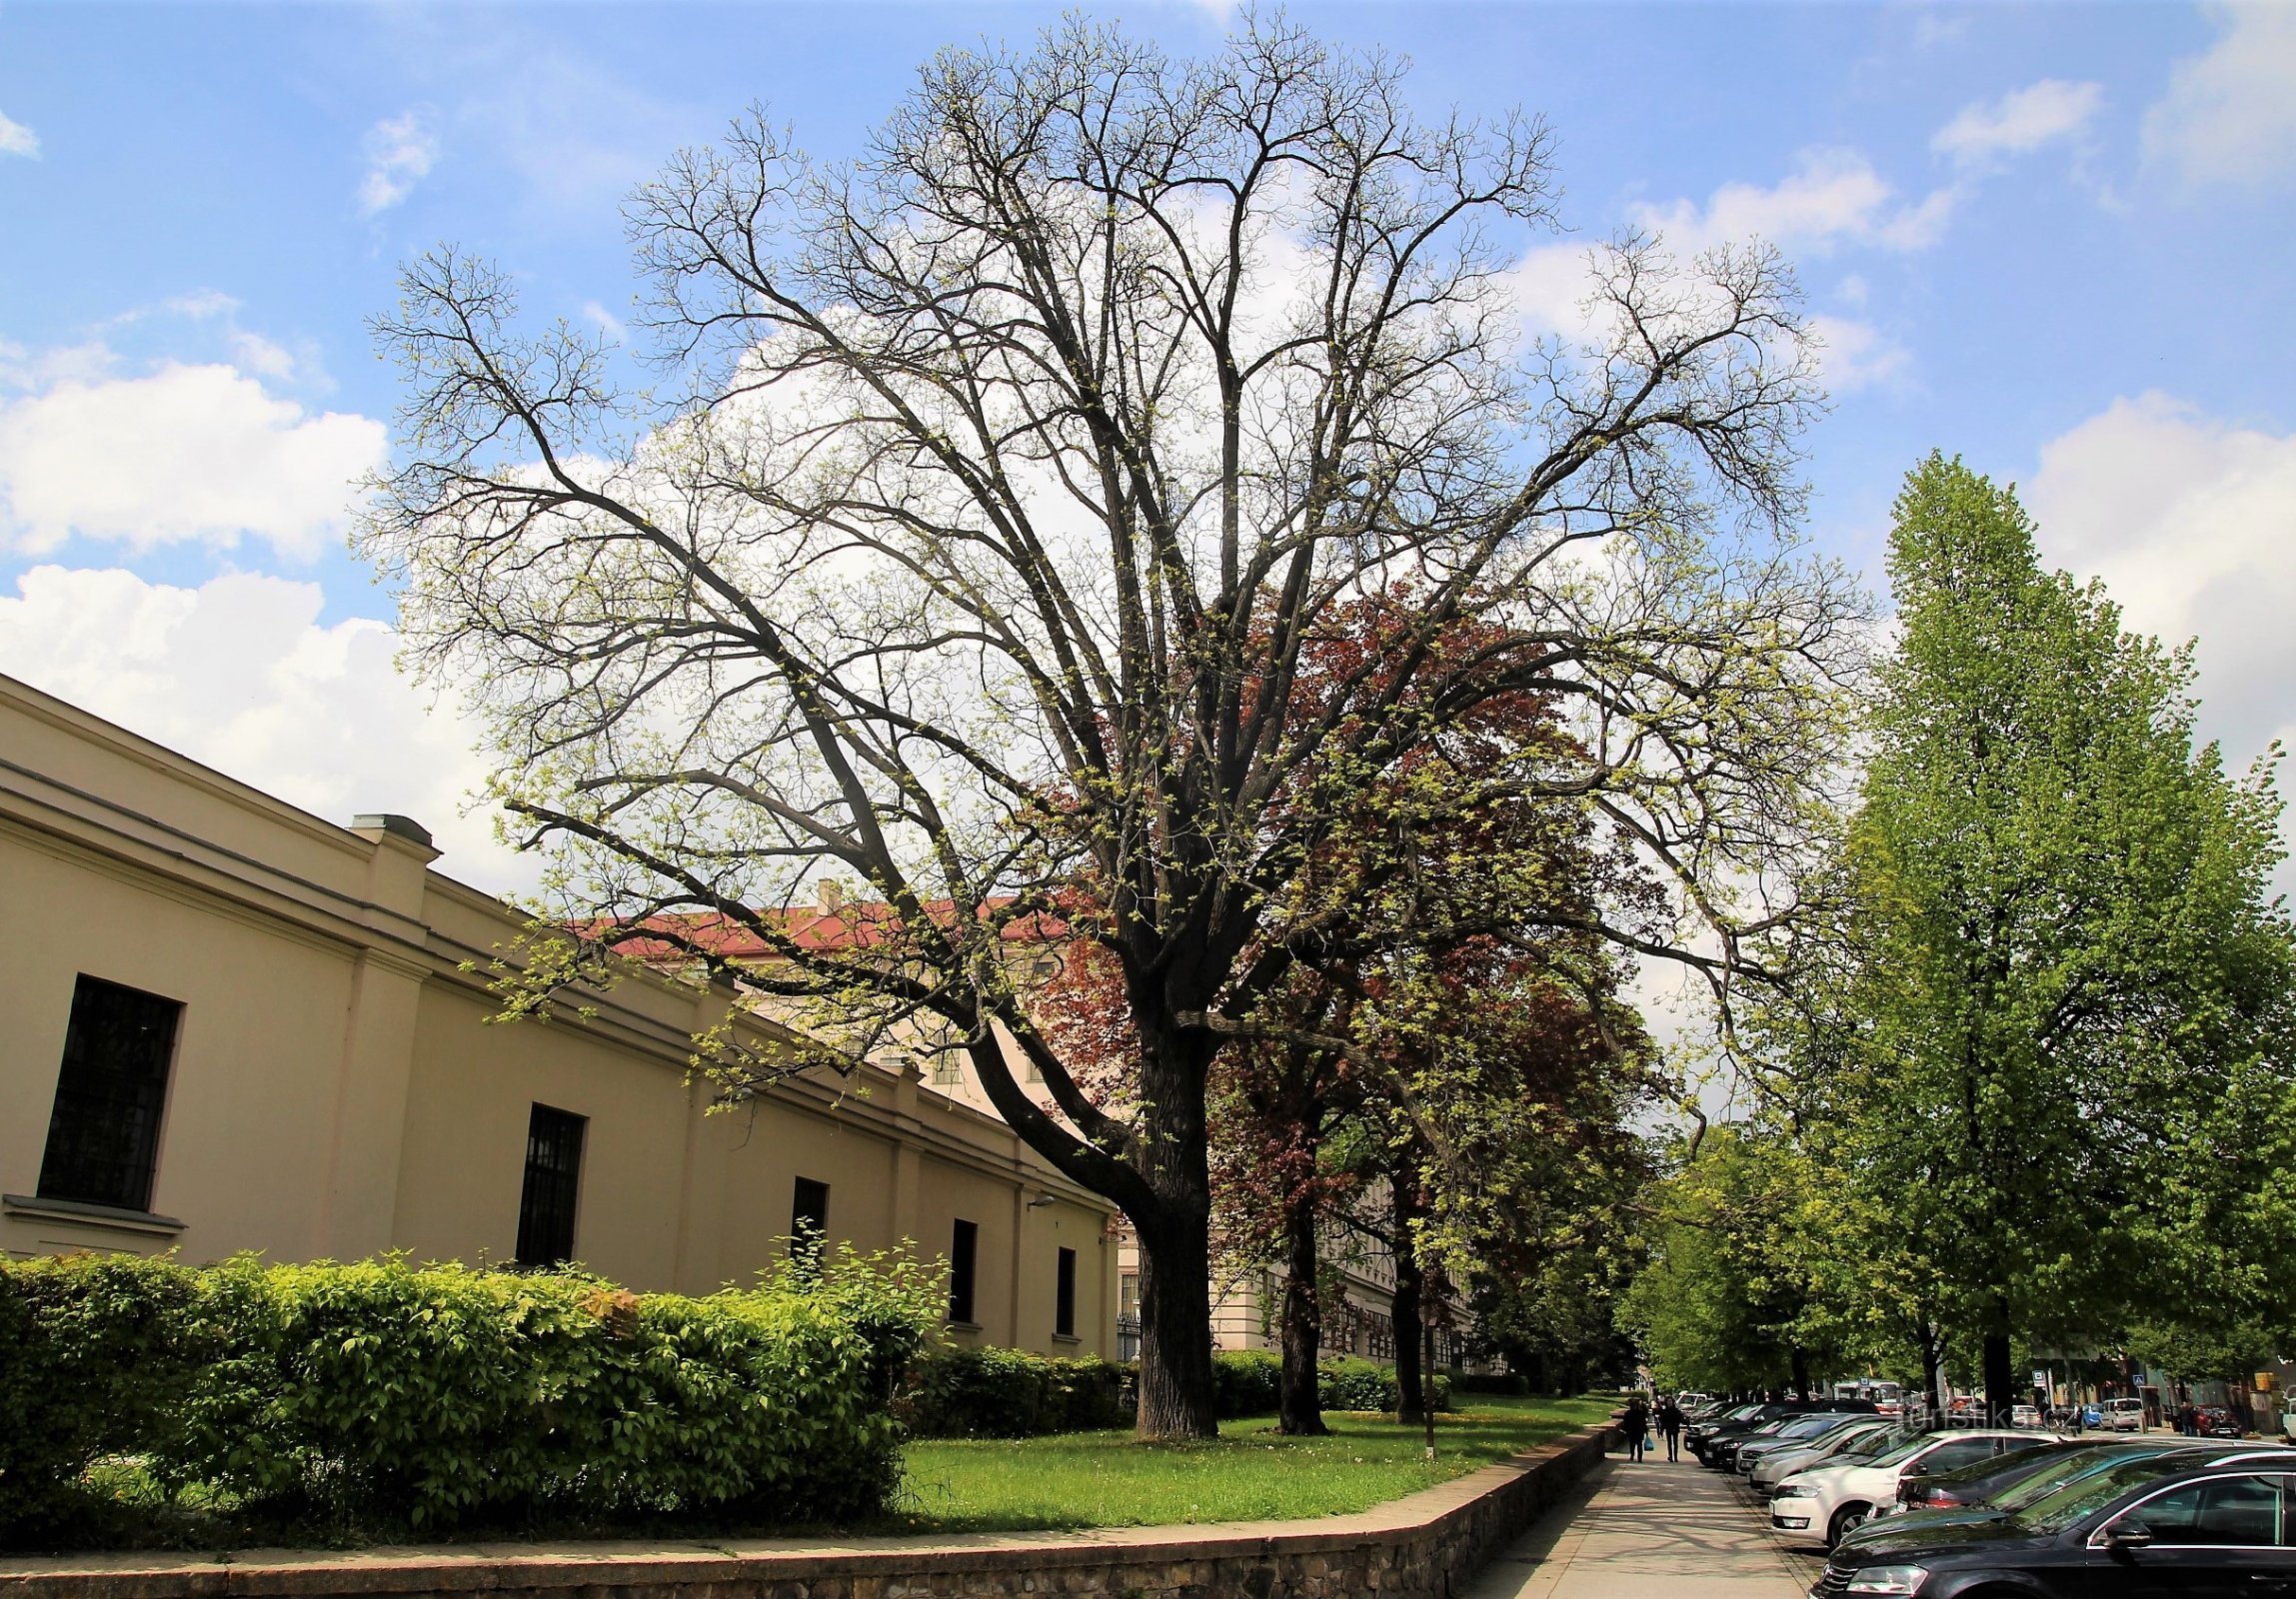 Black walnut tree on Štefánikova street